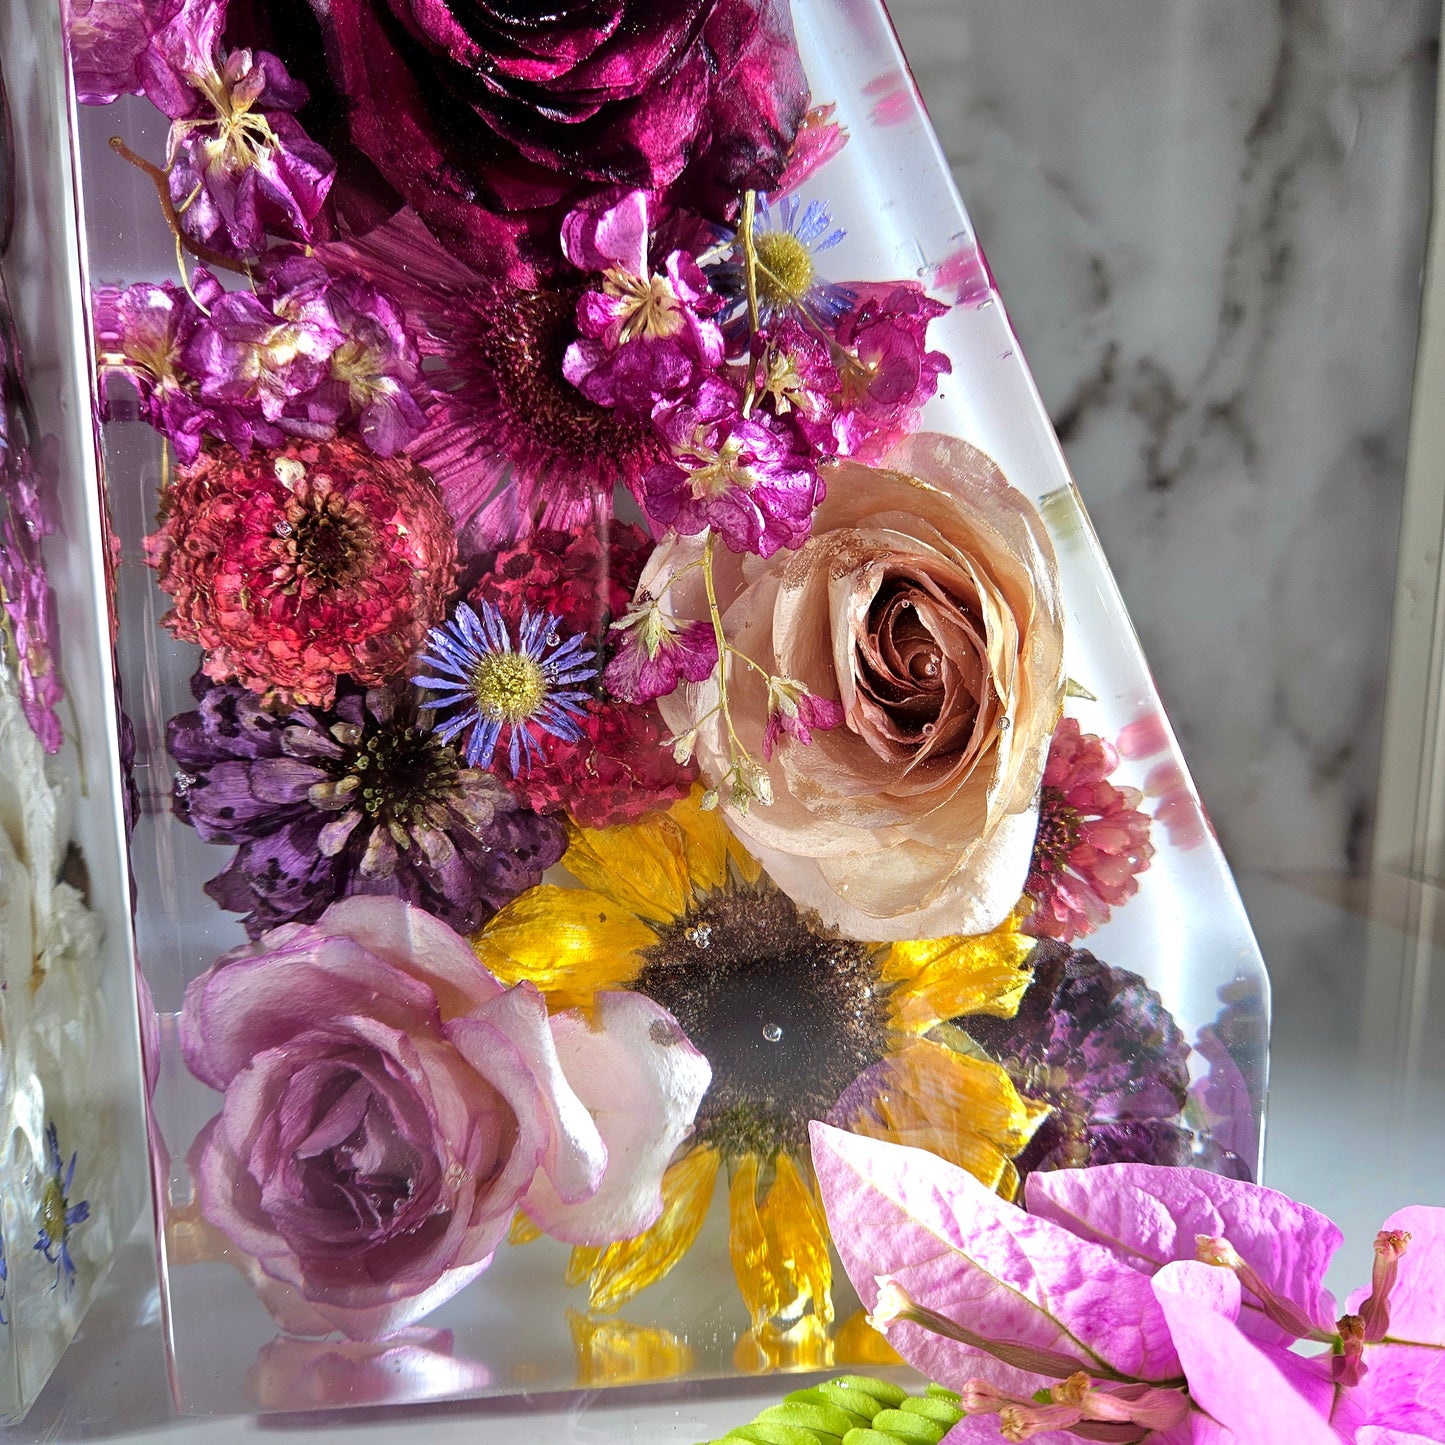 2 Bookends 3D Resin Wedding Bouquet Preservation Floral Gift Keepsake Save Your Wedding Flowers Forever